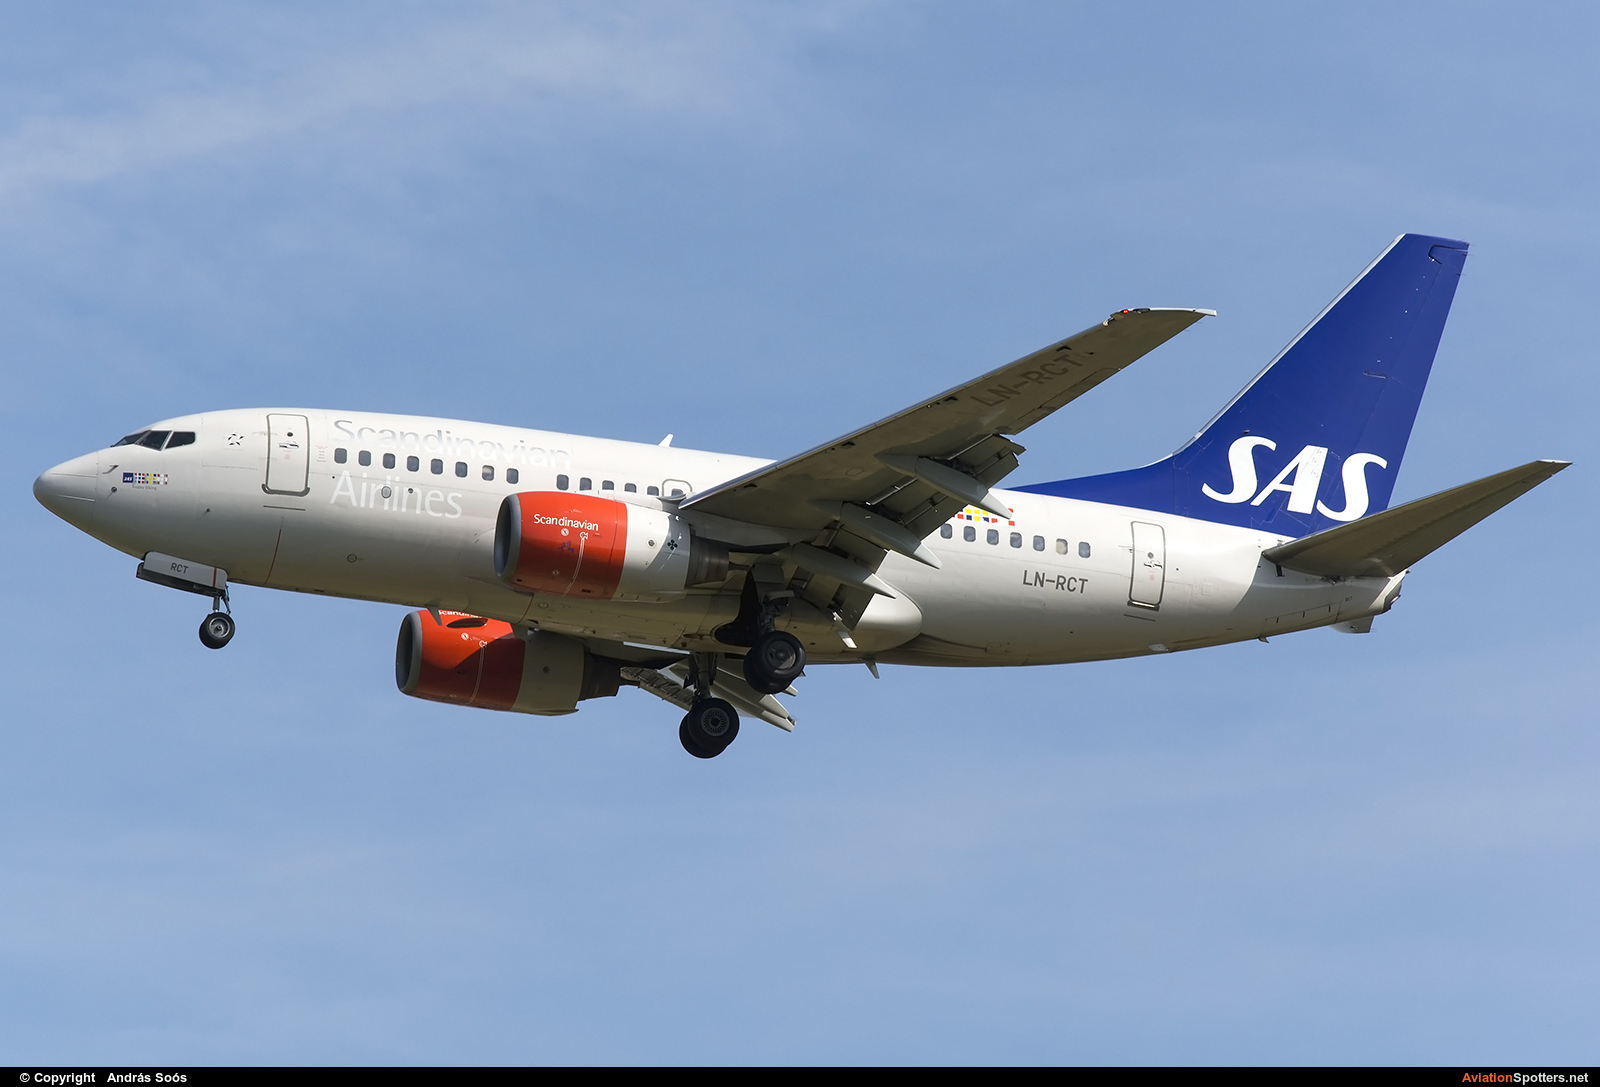 SAS - Scandinavian Airlines  -  737-600  (LN-RCT) By András Soós (sas1965)